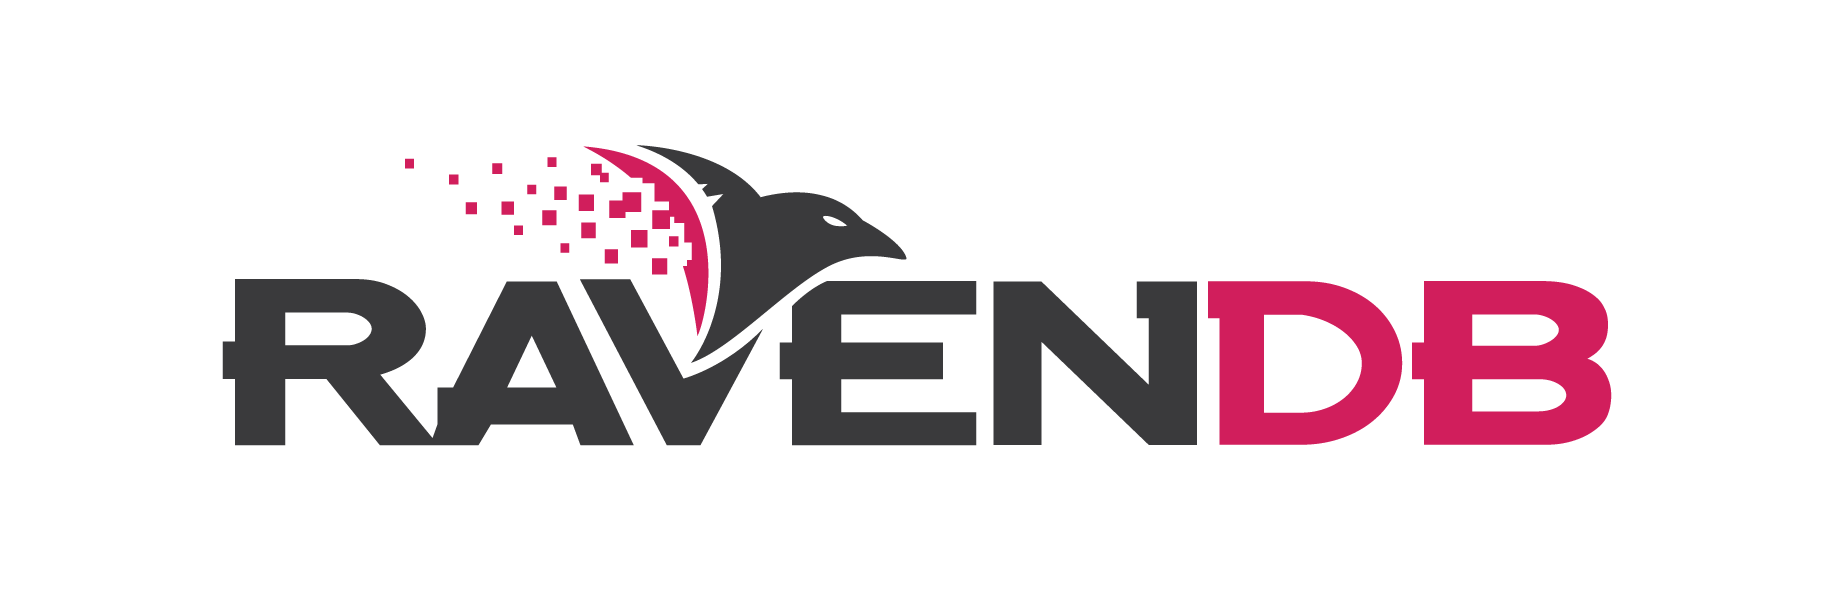 Ravendb Logotype